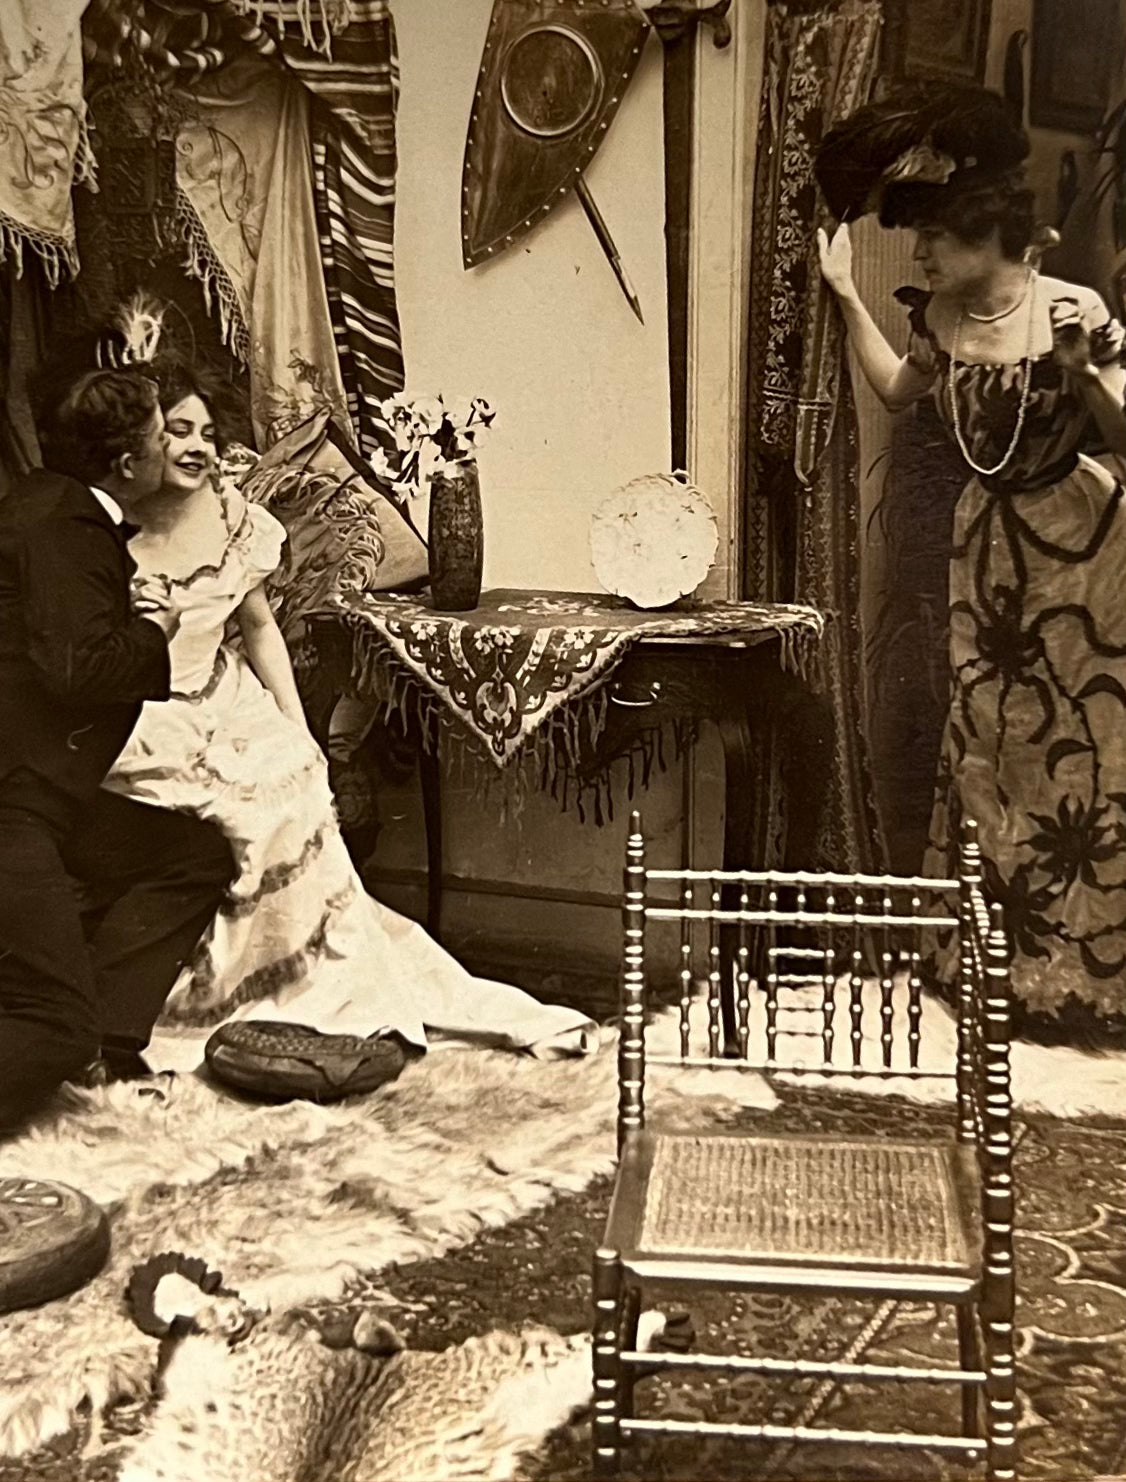 "And impatiently waiting for me", fotografía estereoscópica de teatro - H. C. White Co, ca. 1903